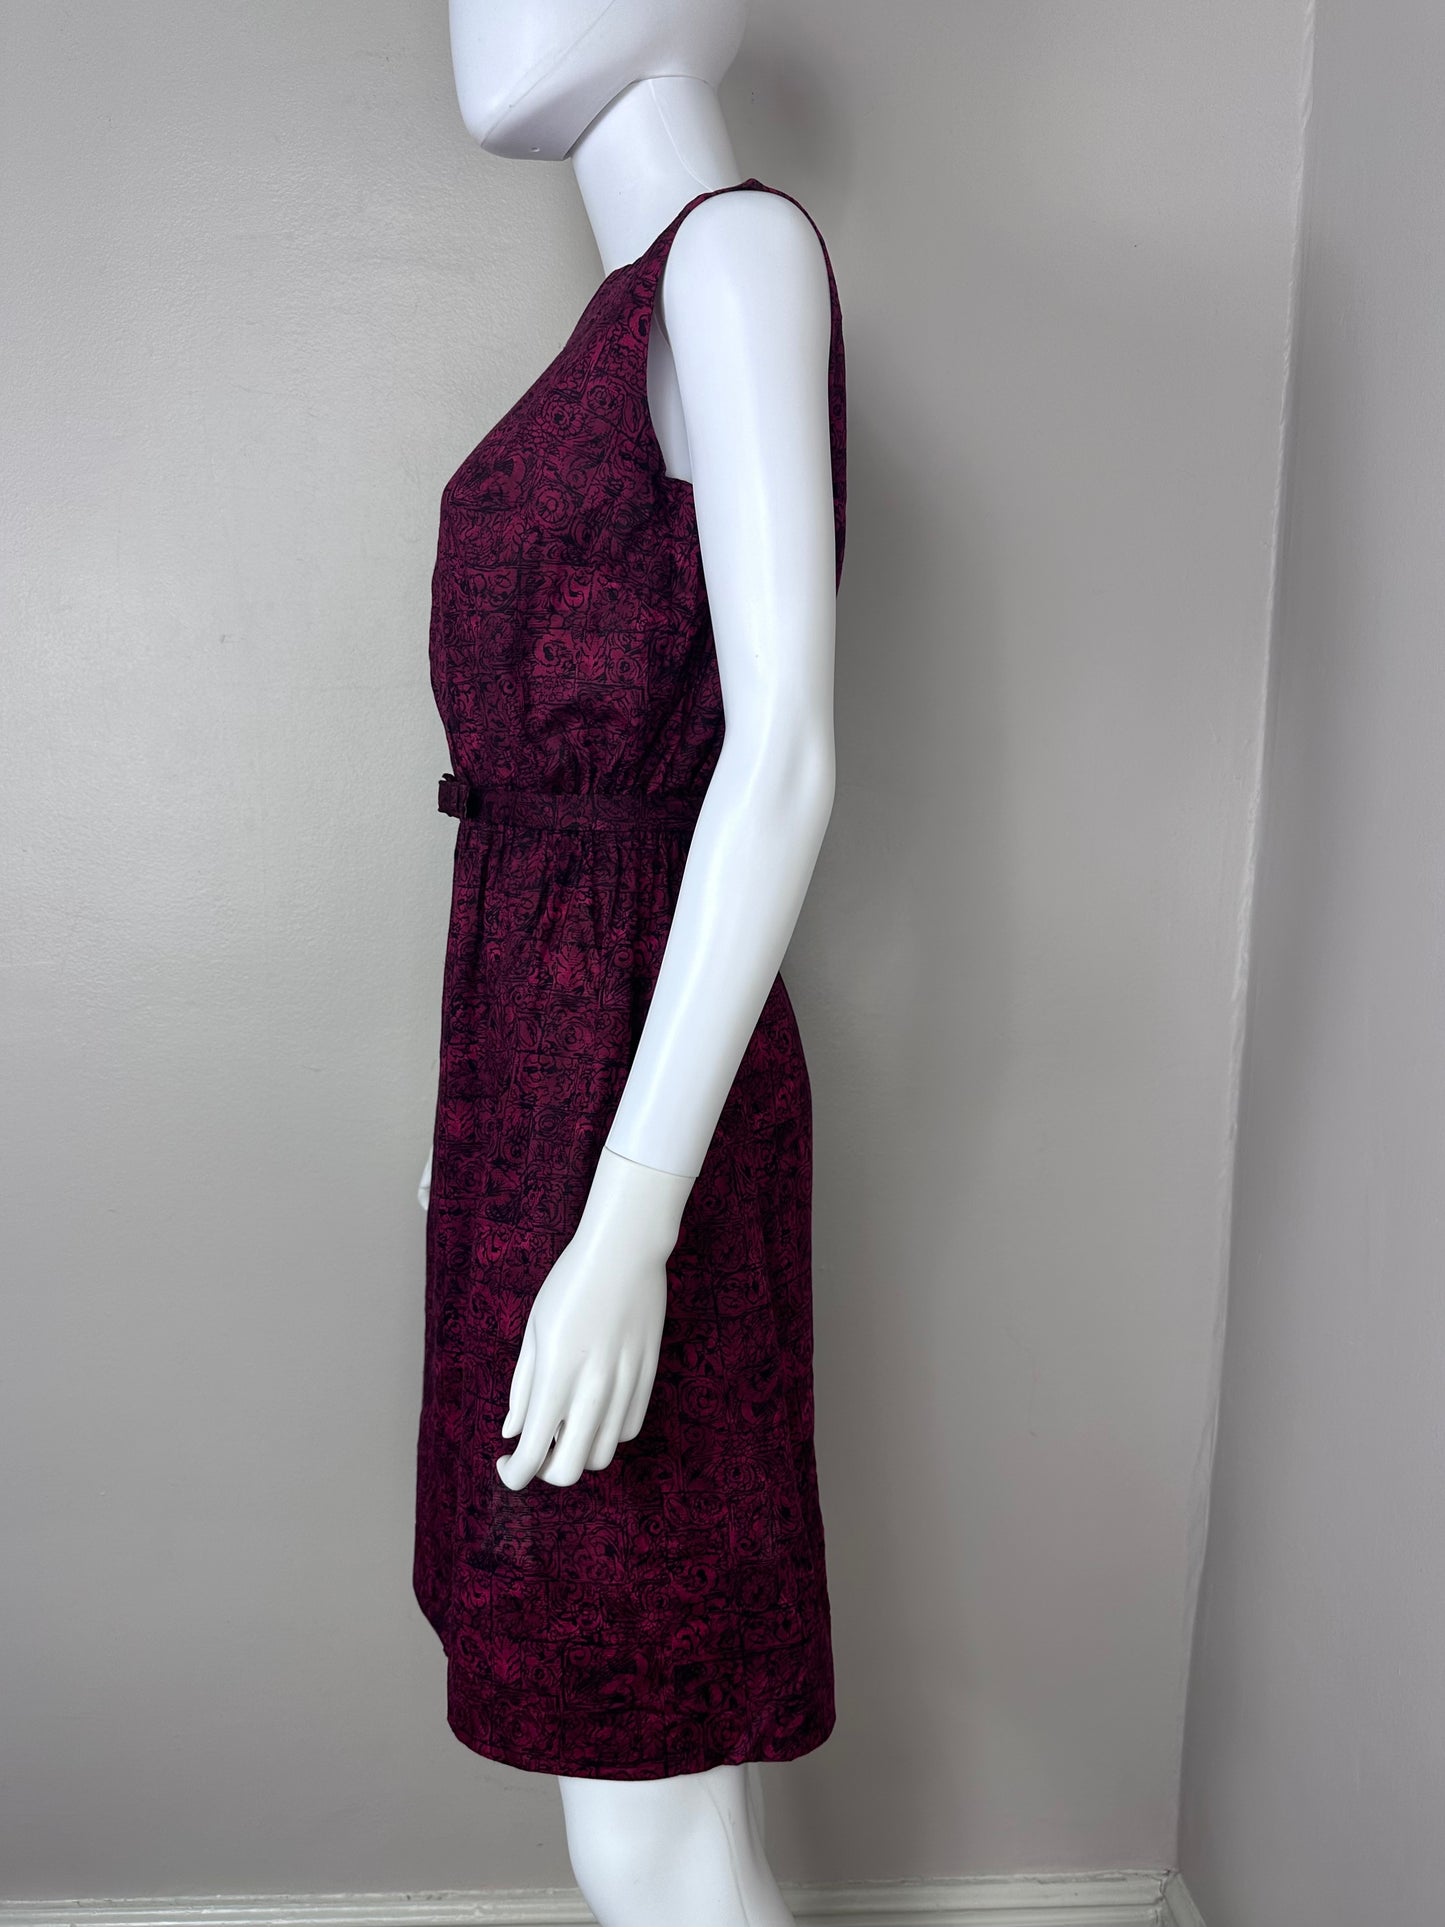 1960s Raspberry Scribble Print Sleeveless Dress, Handmade Size S-M